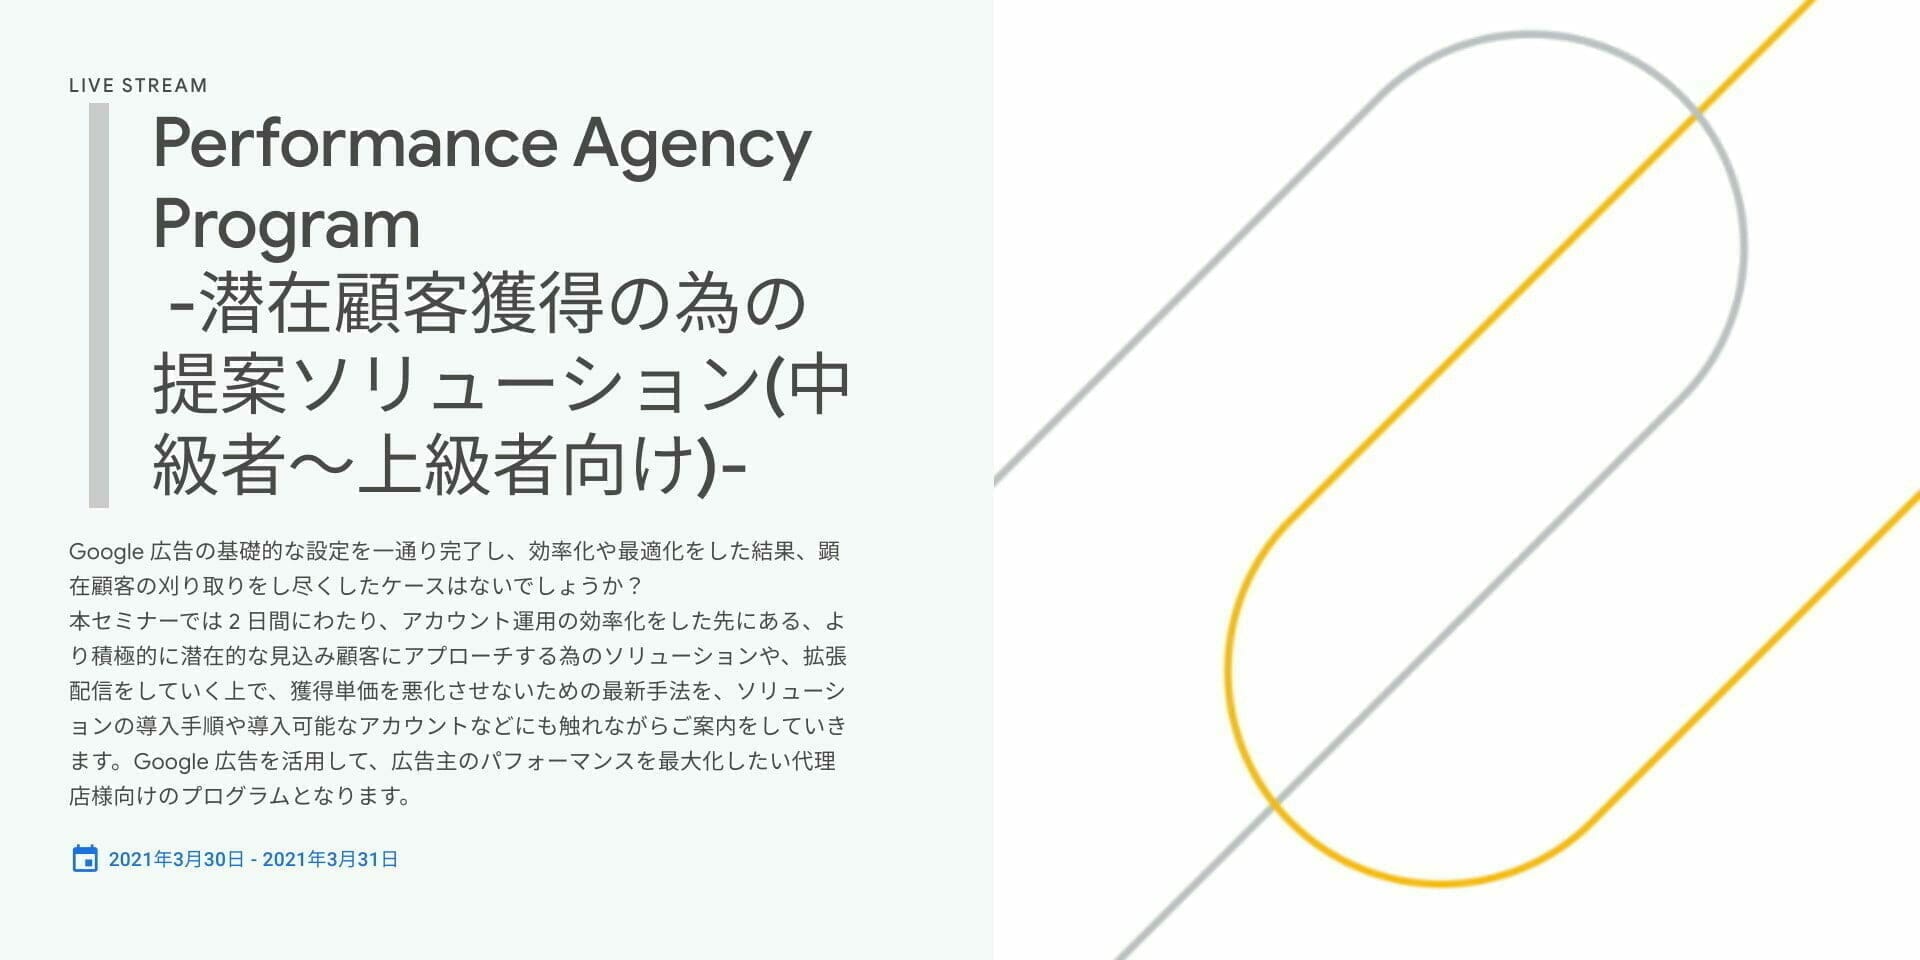 [Google 広告] Performance Agency Program -潜在顧客獲得の為の提案ソリューション(中級者〜上級者向け)-